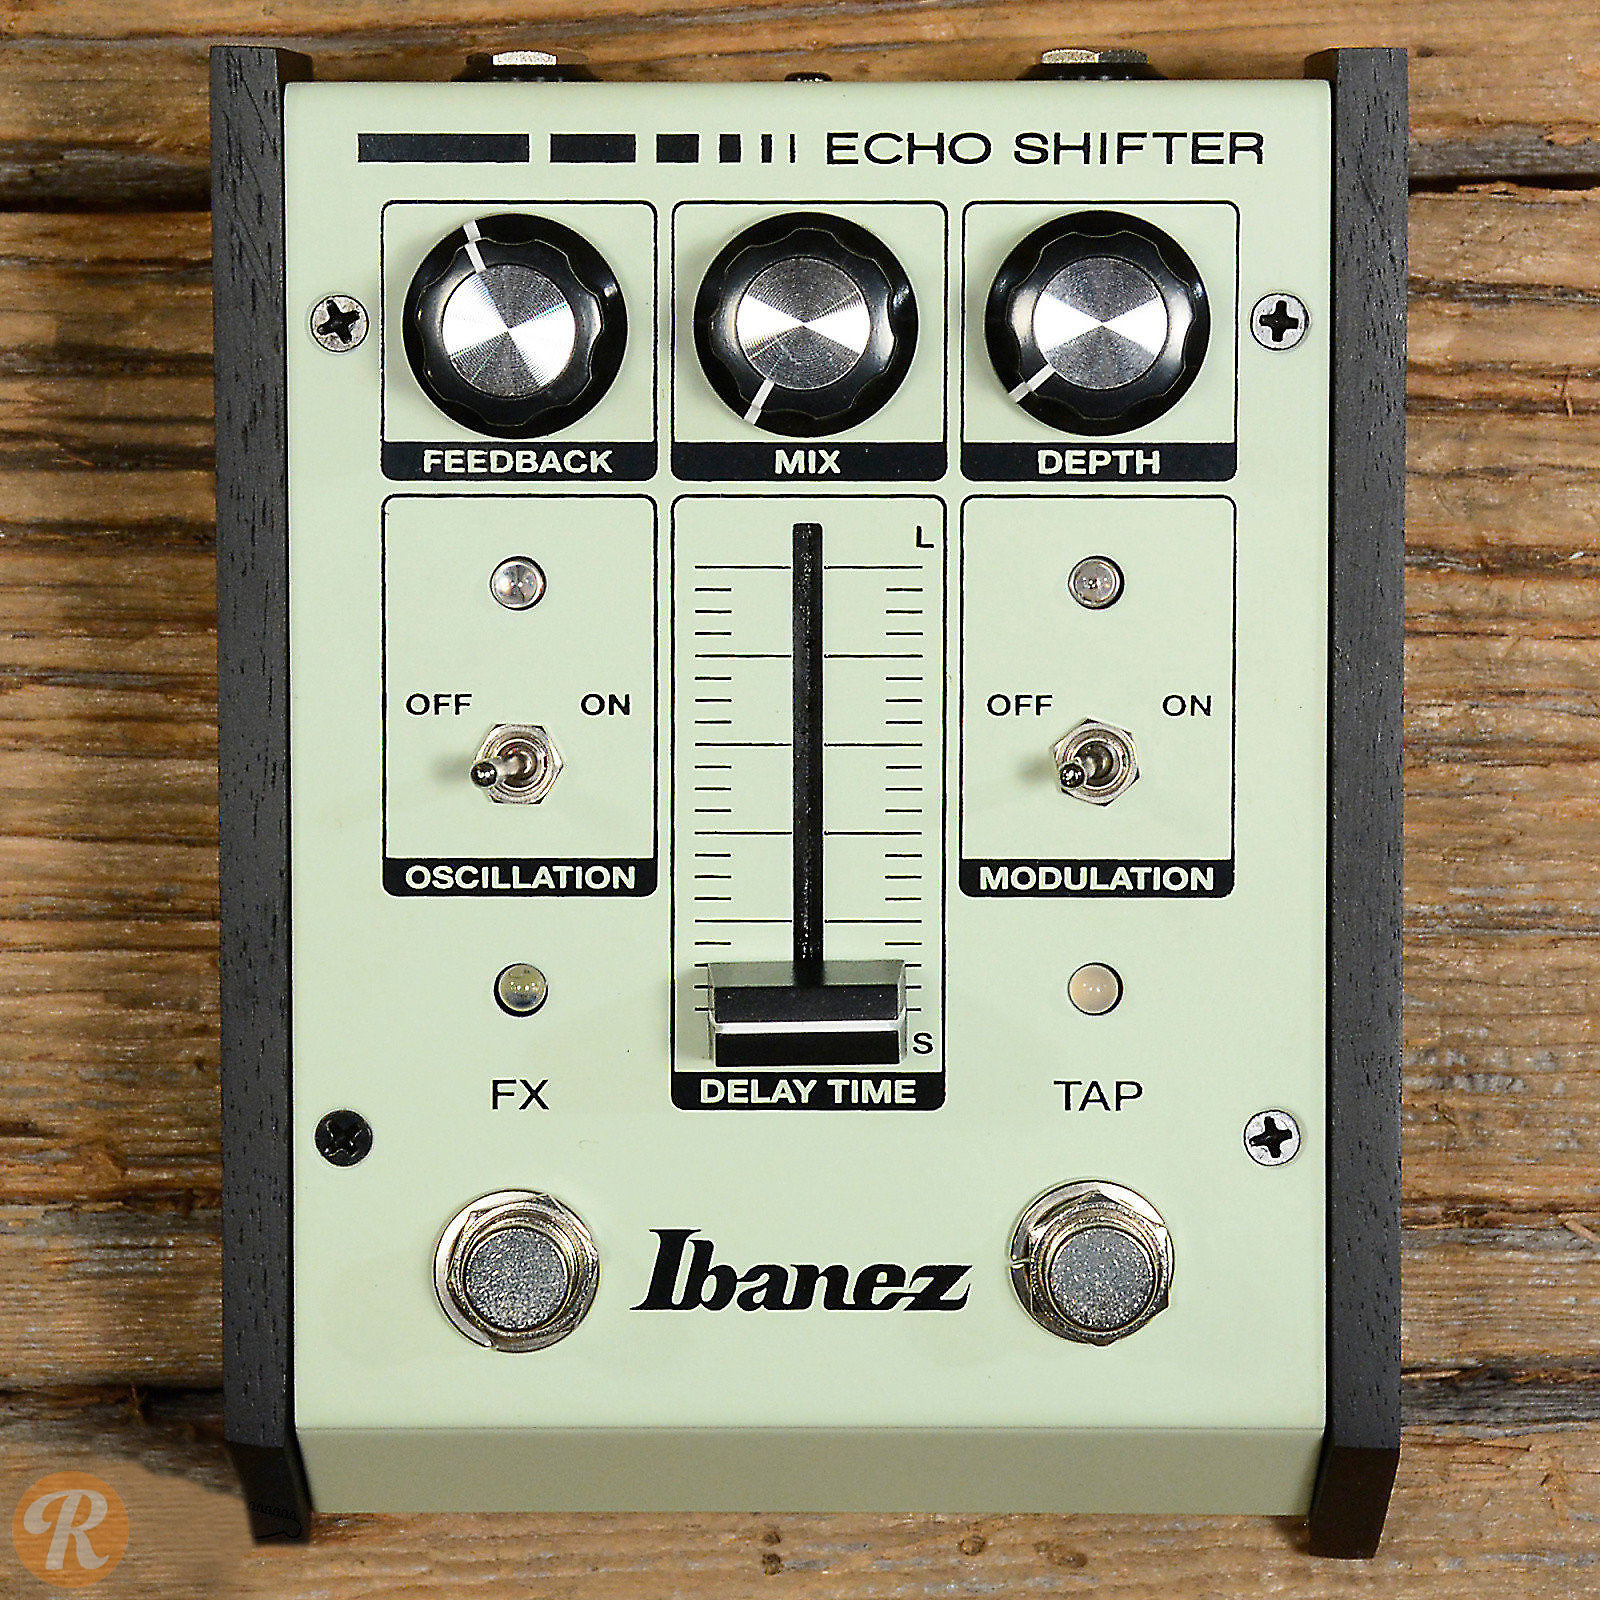 Ibanez ES2 Echo Shifter | Reverb